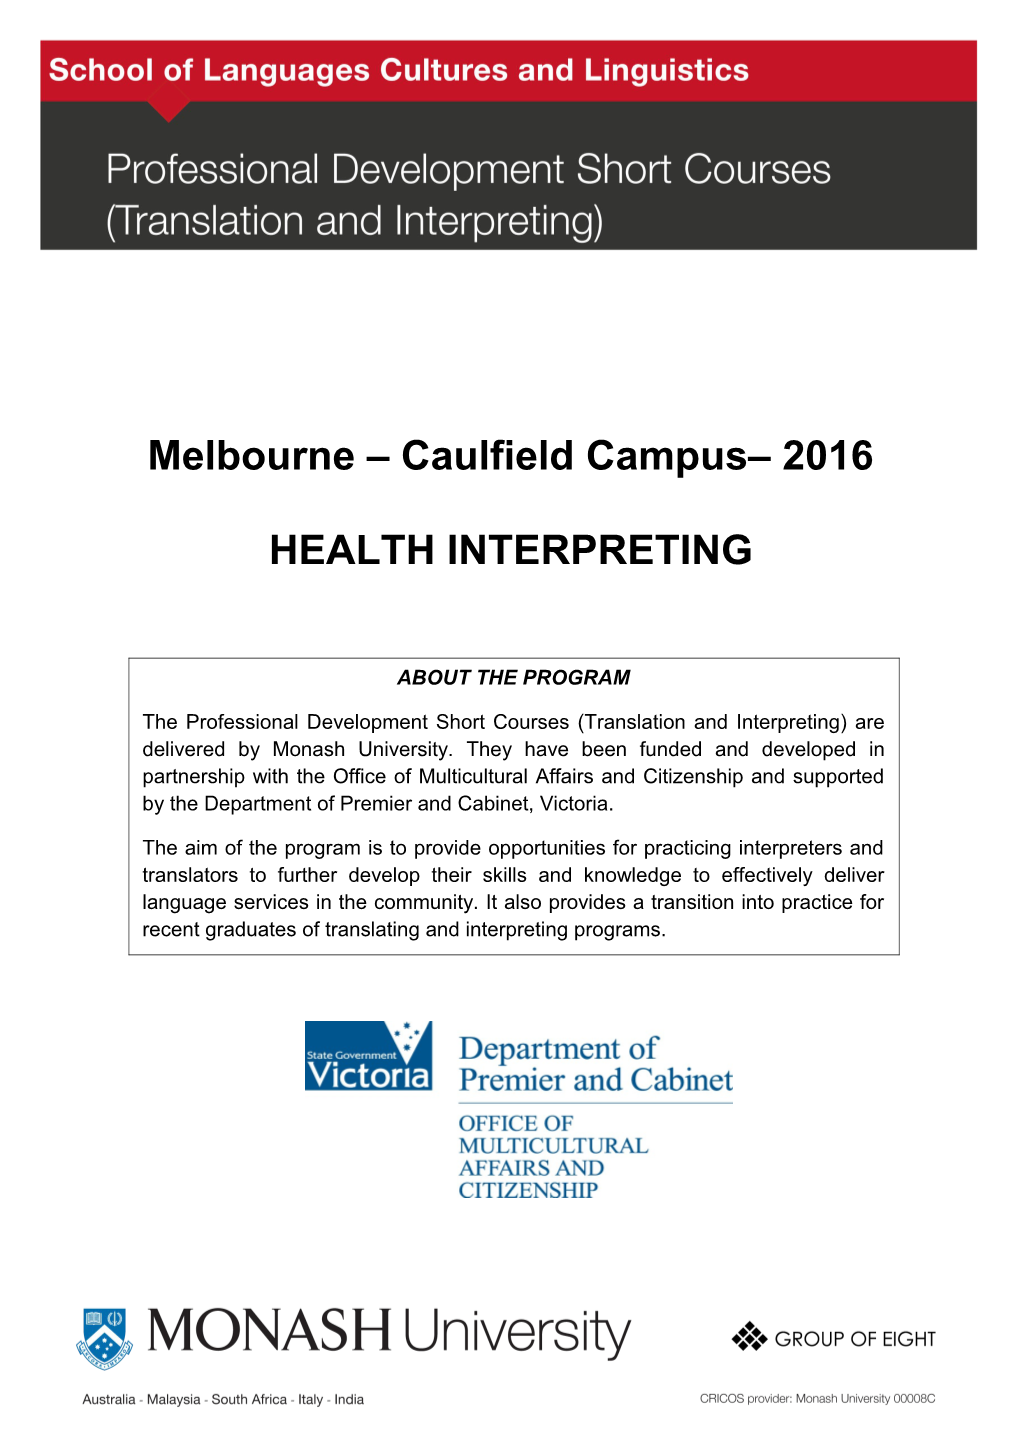 Melbourne Caulfield Campus 2016